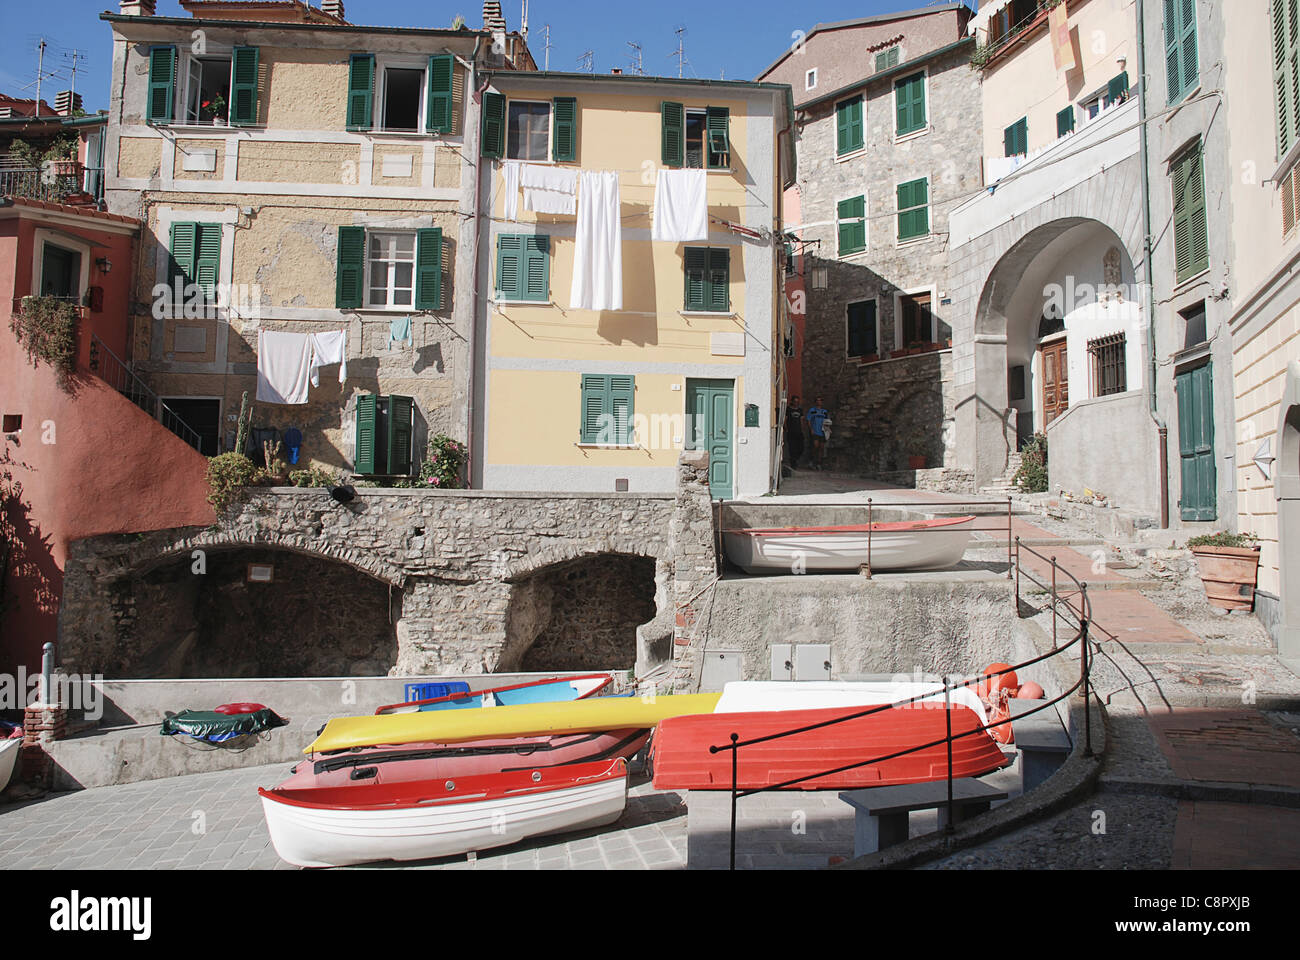 Italy, Liguria, Tellaro, seafront houses and boats in Ligurian village Stock Photo